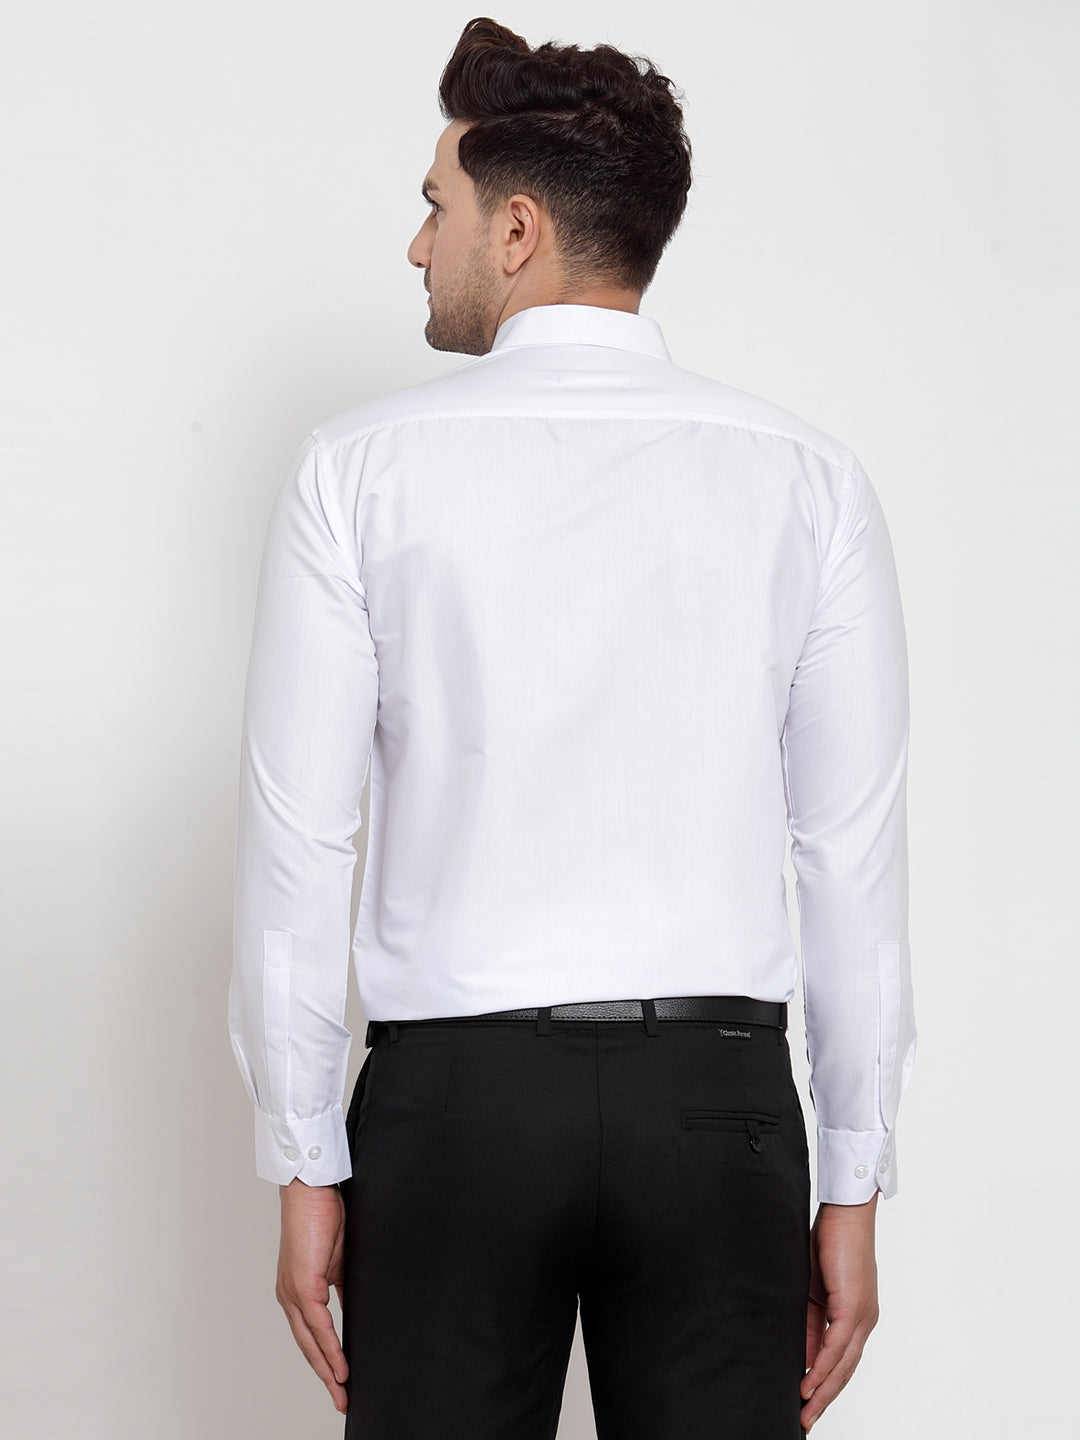 Jainish White Men's Cotton Solid Button Down Formal Shirts